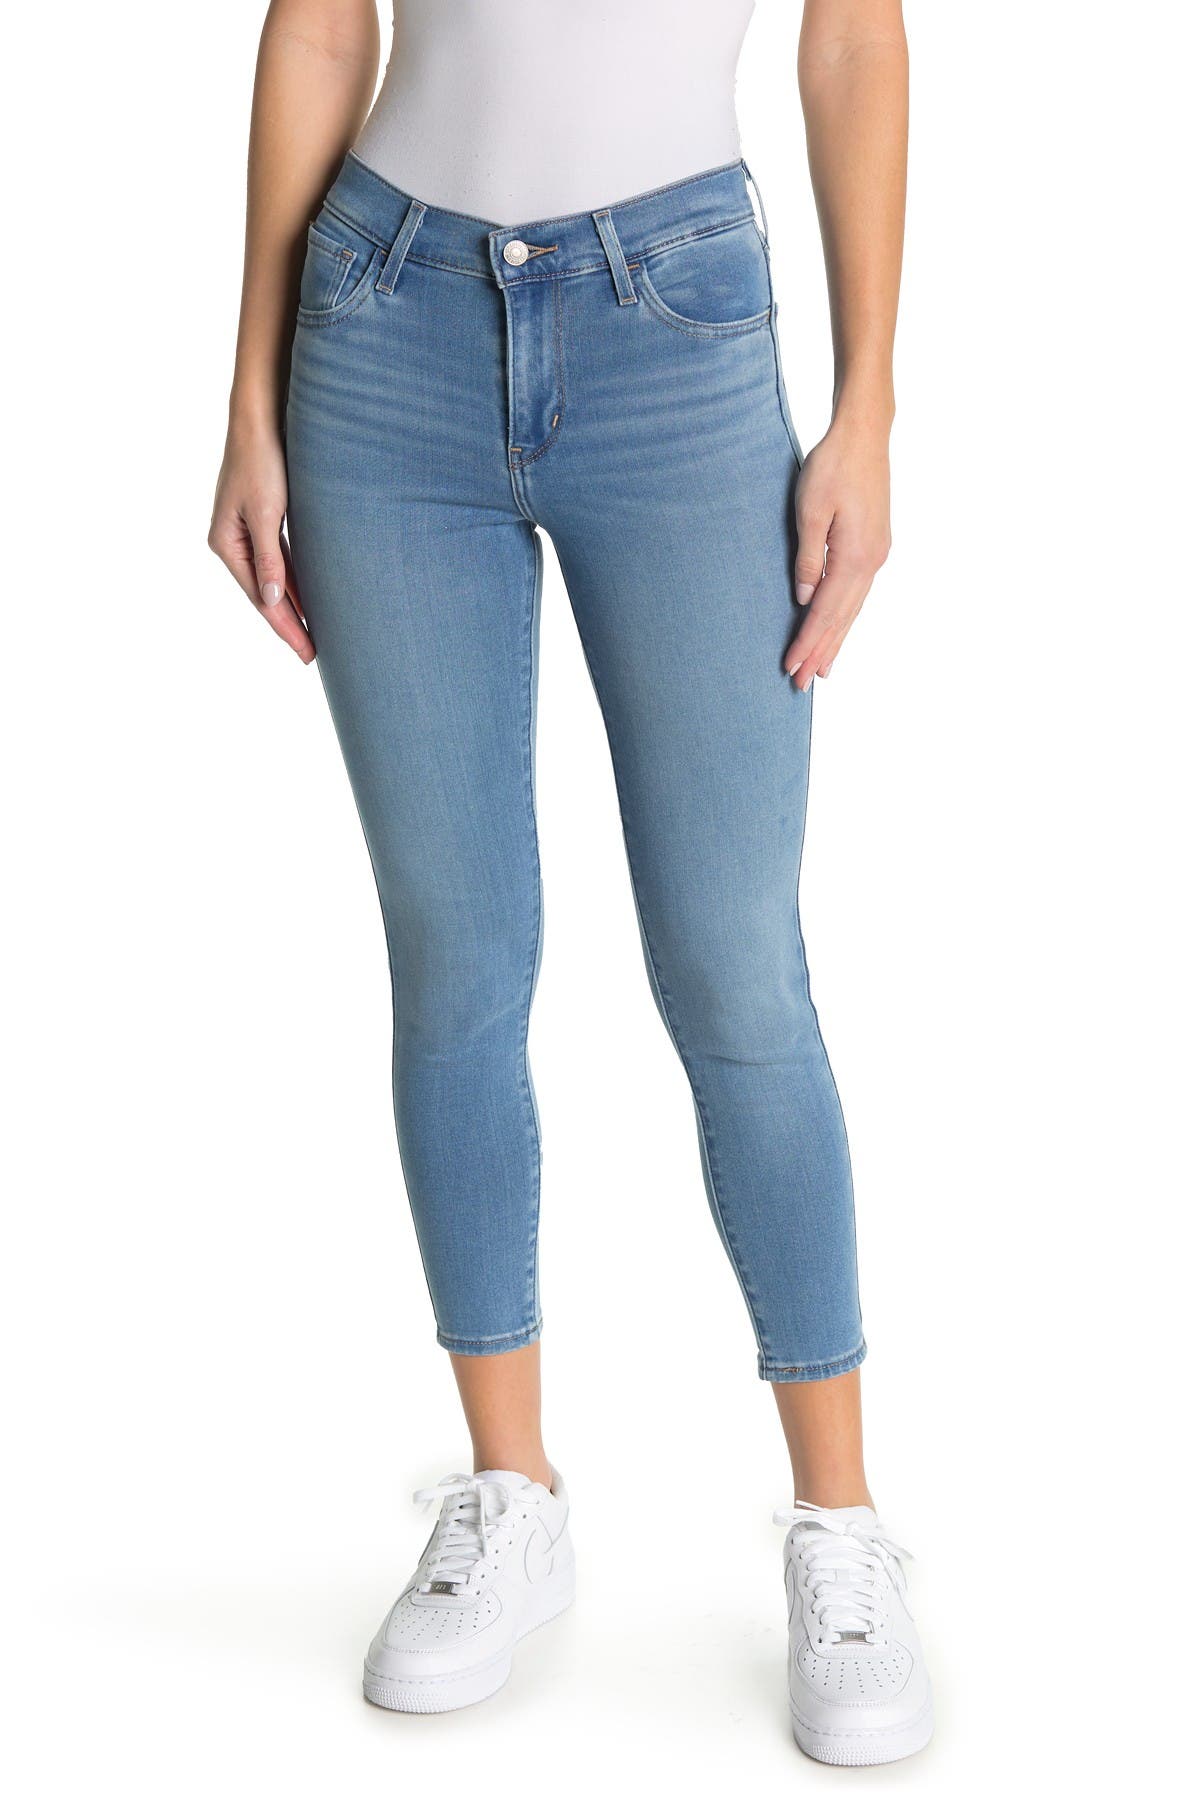 levi's jeans 720 high rise super skinny